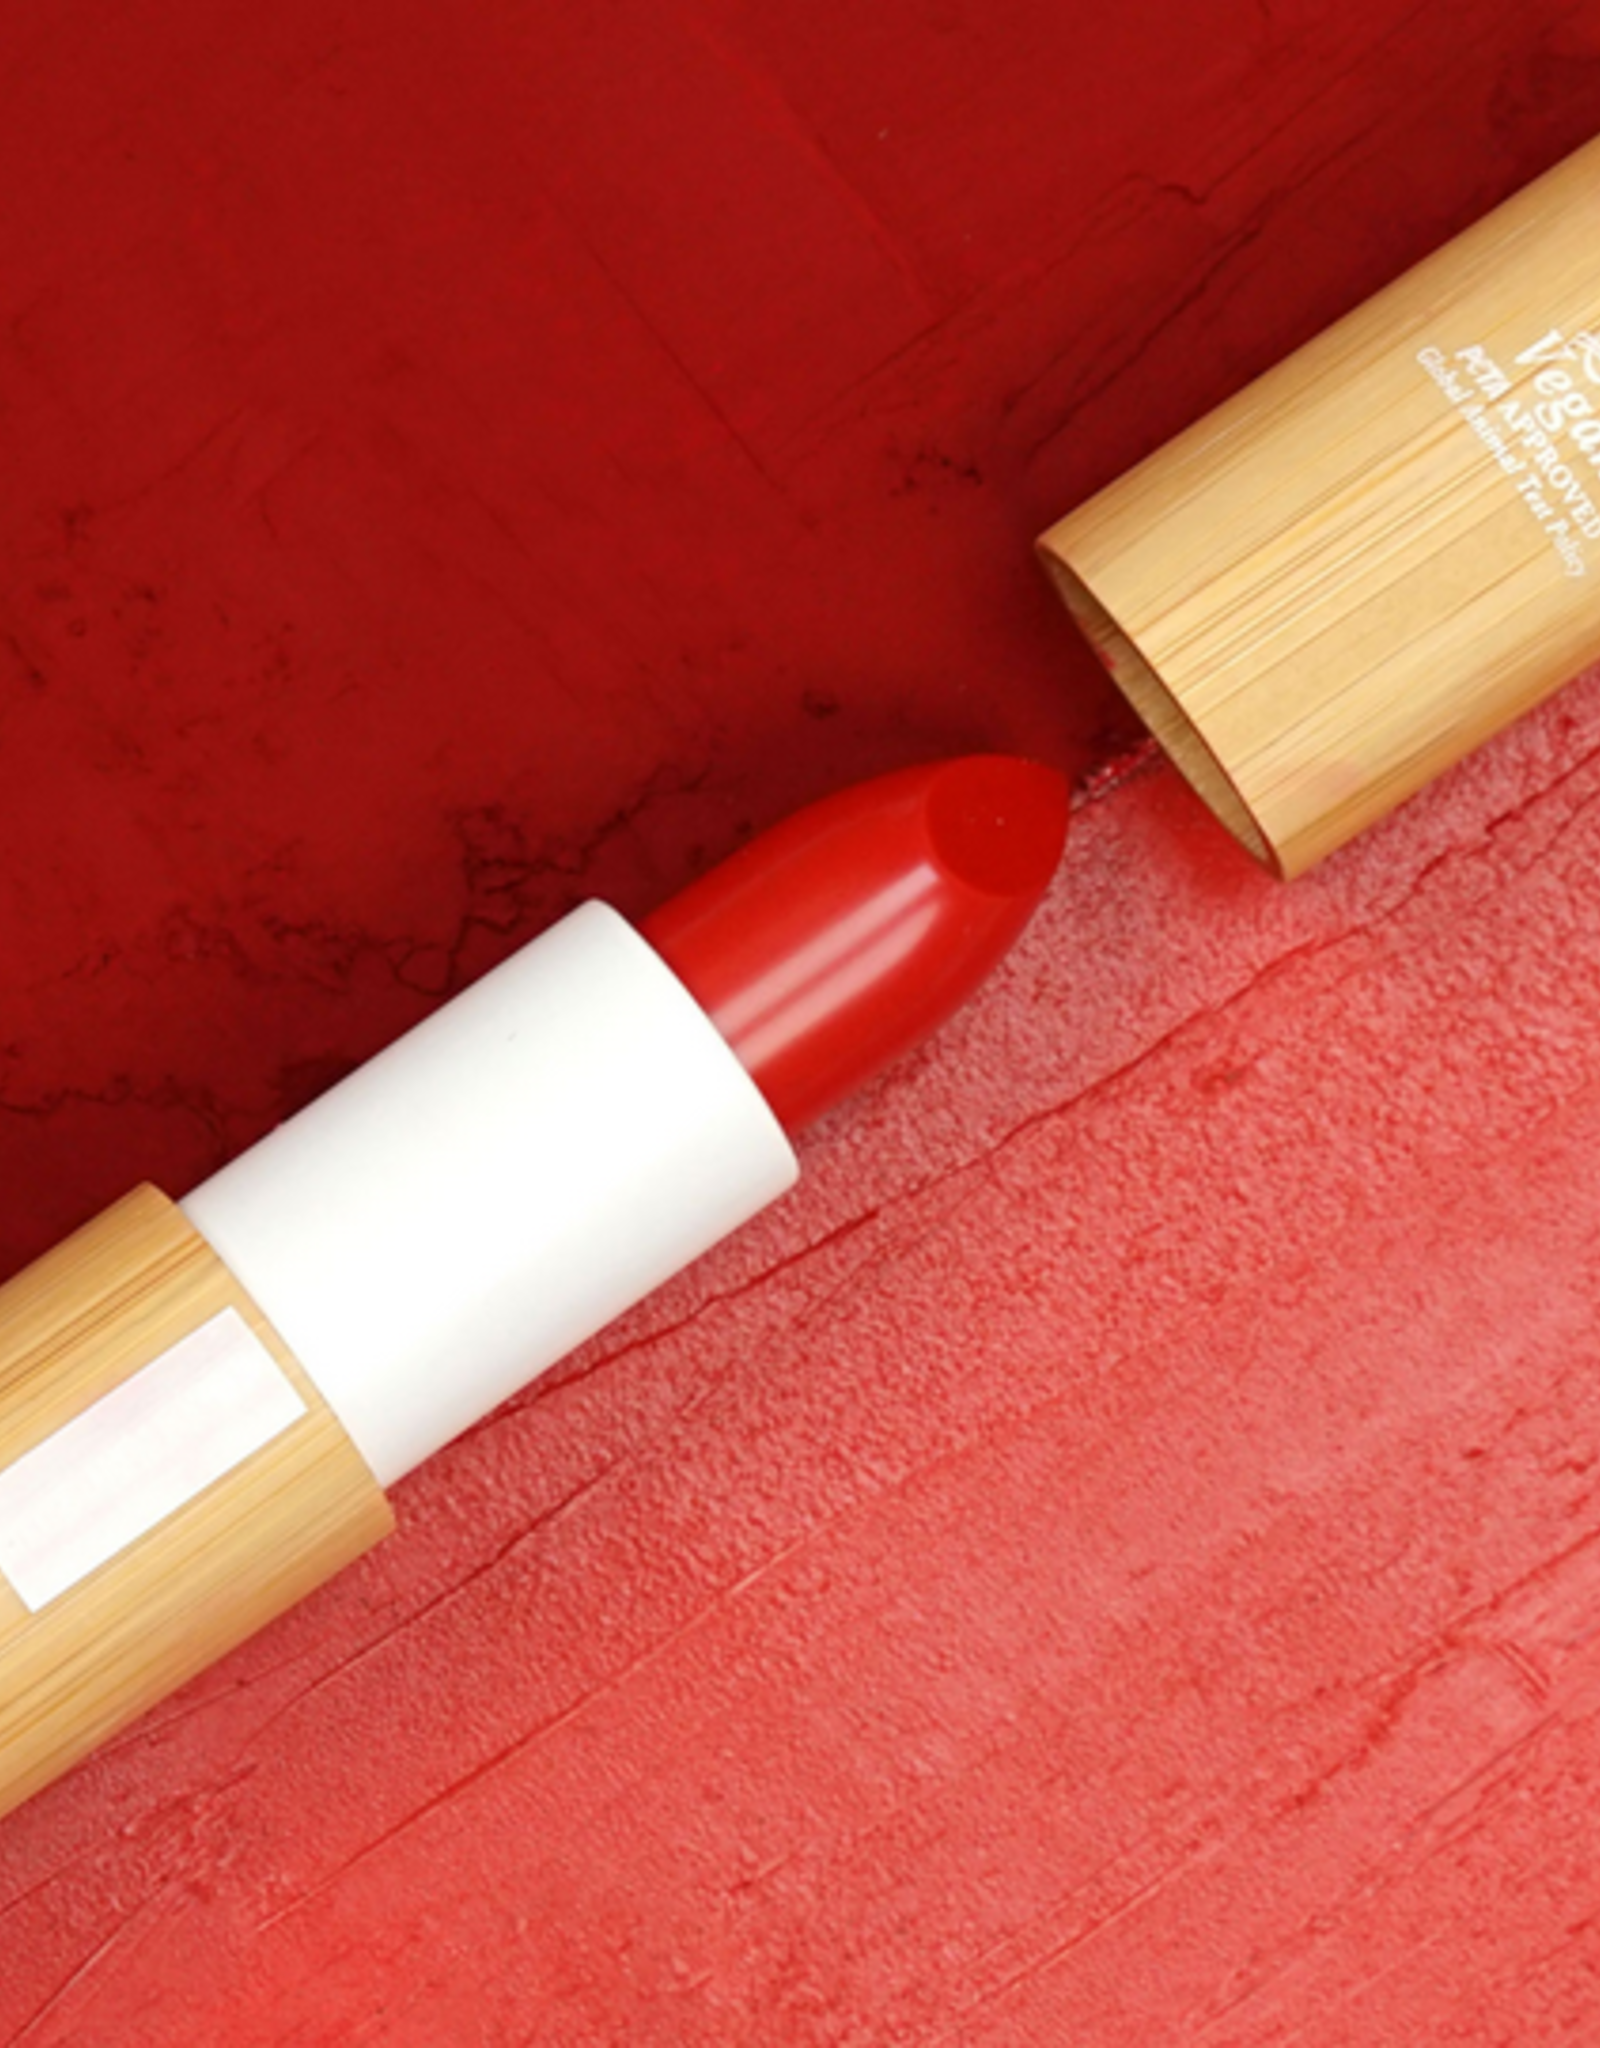 Zao ZAO Bamboe Daring Lippenstift 420 (Le Rouge) - 3,5g